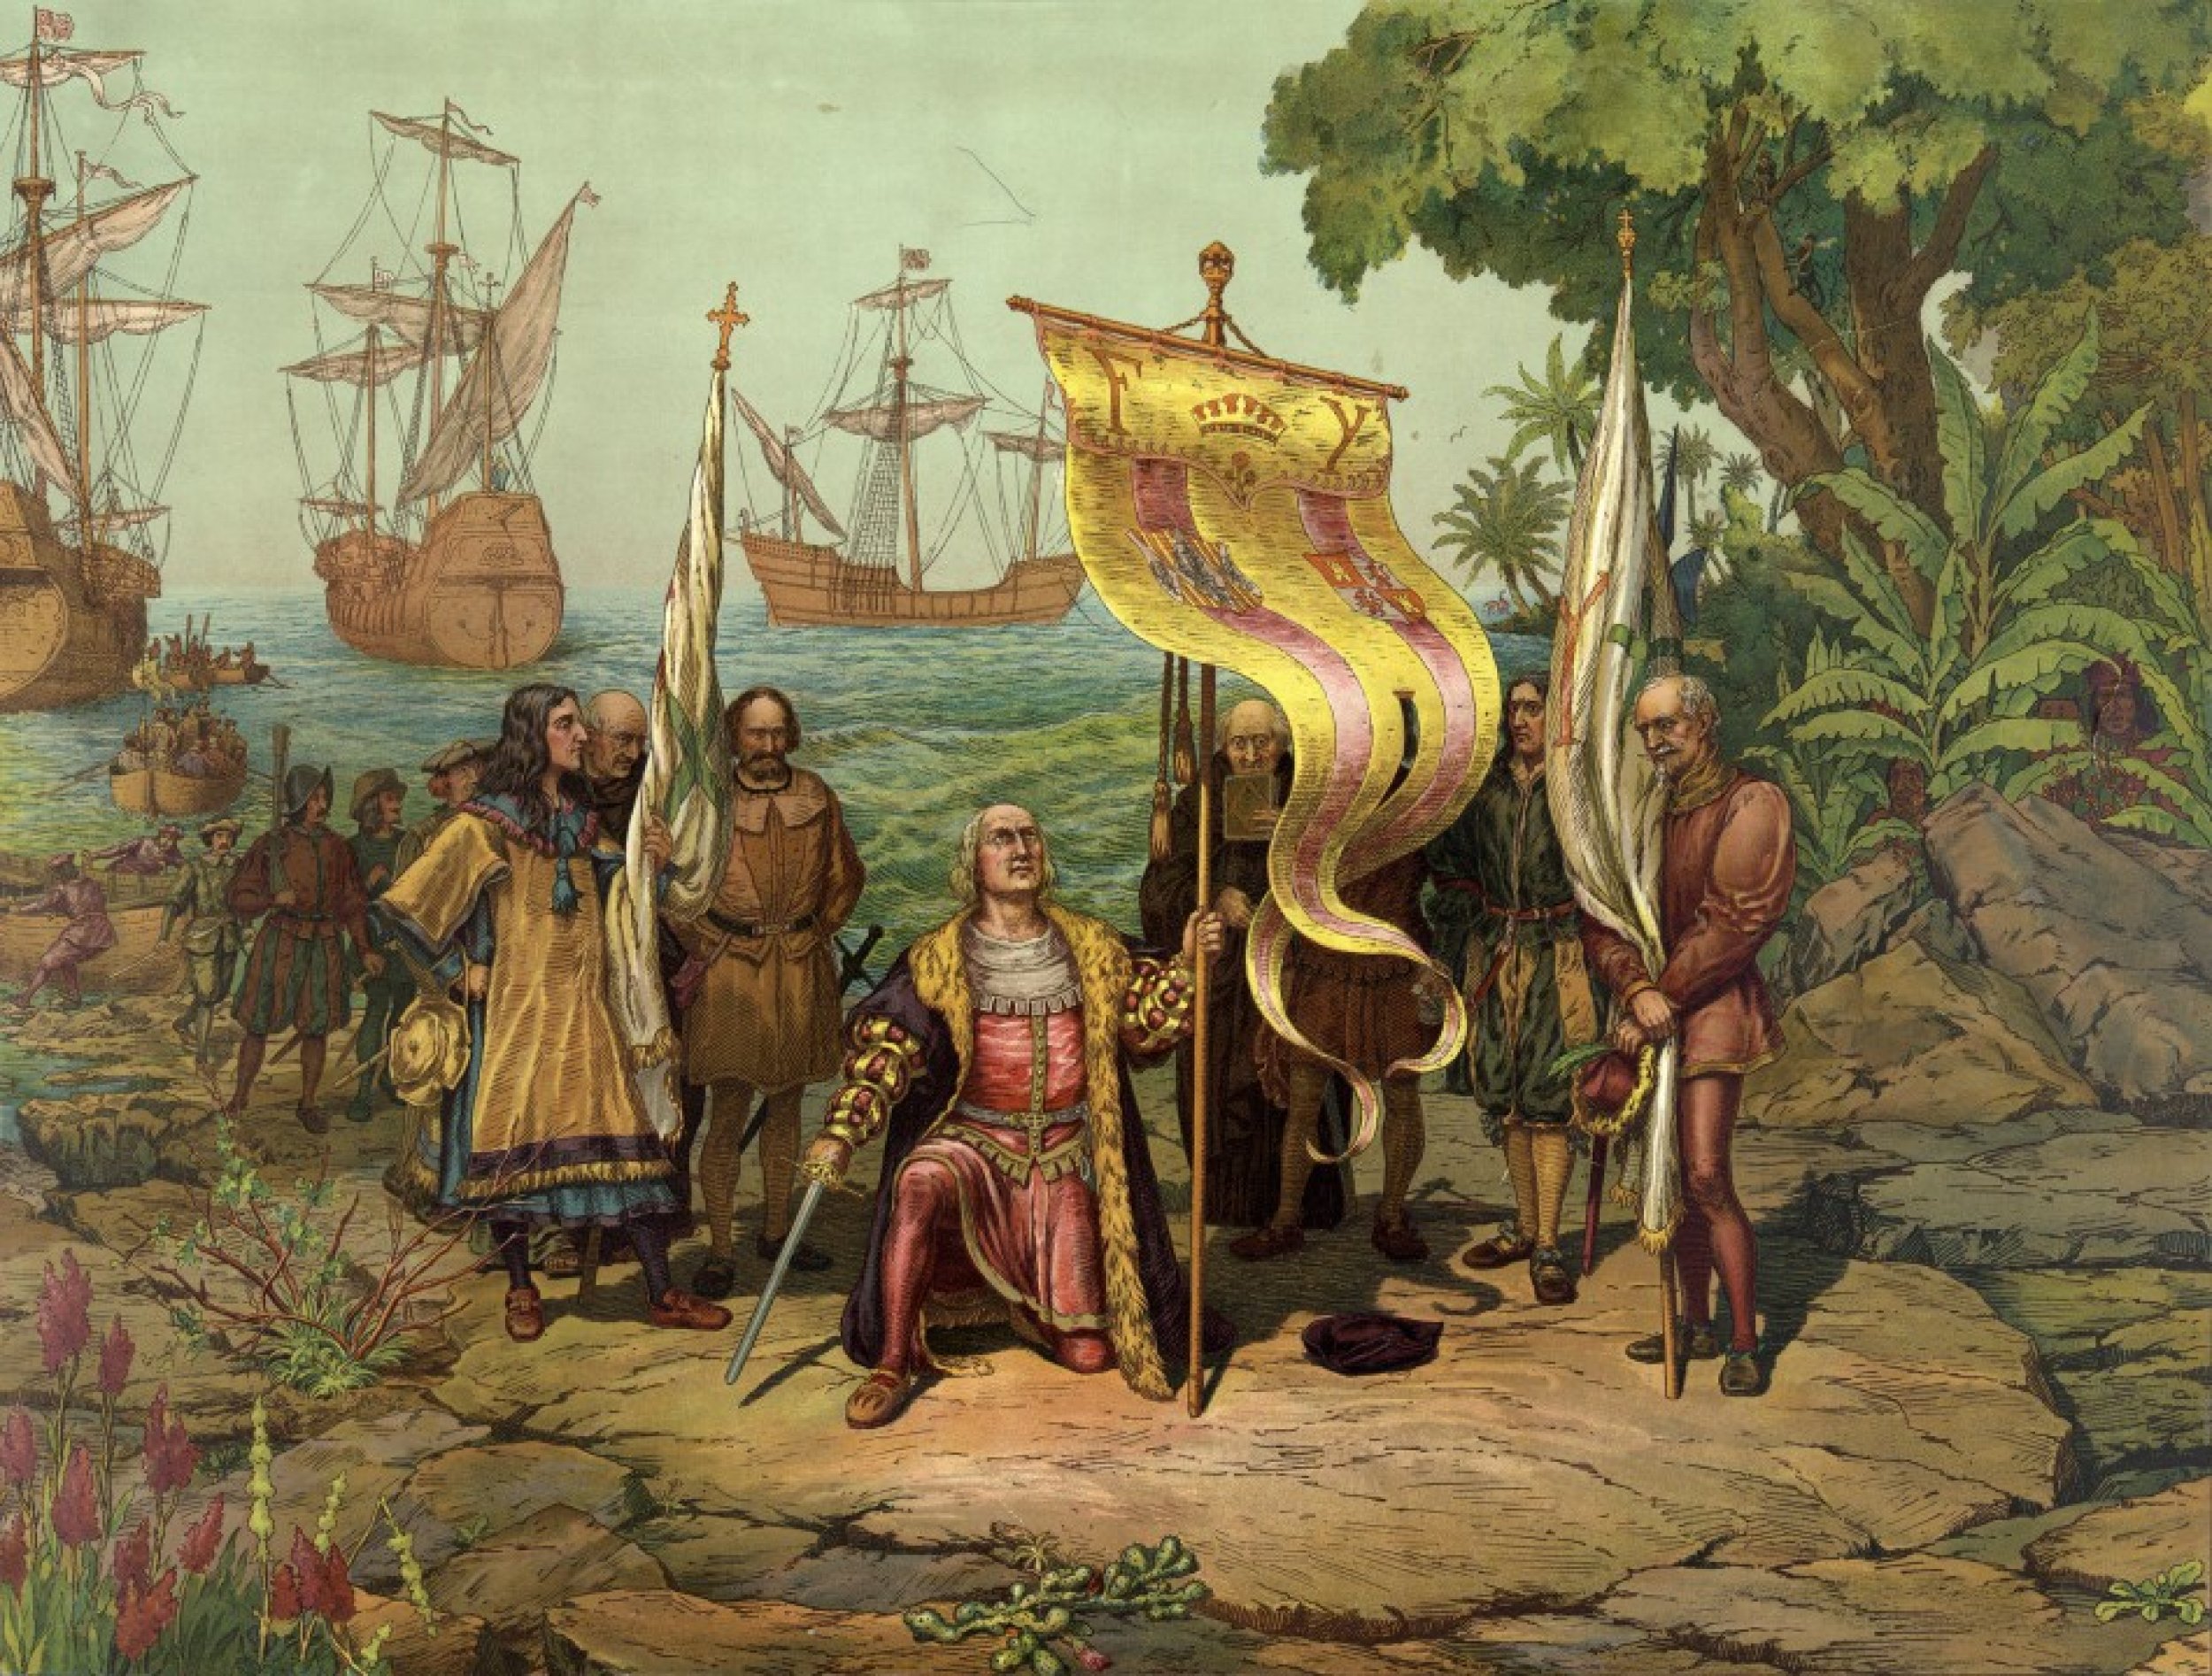 MYTH Columbus discovered America.